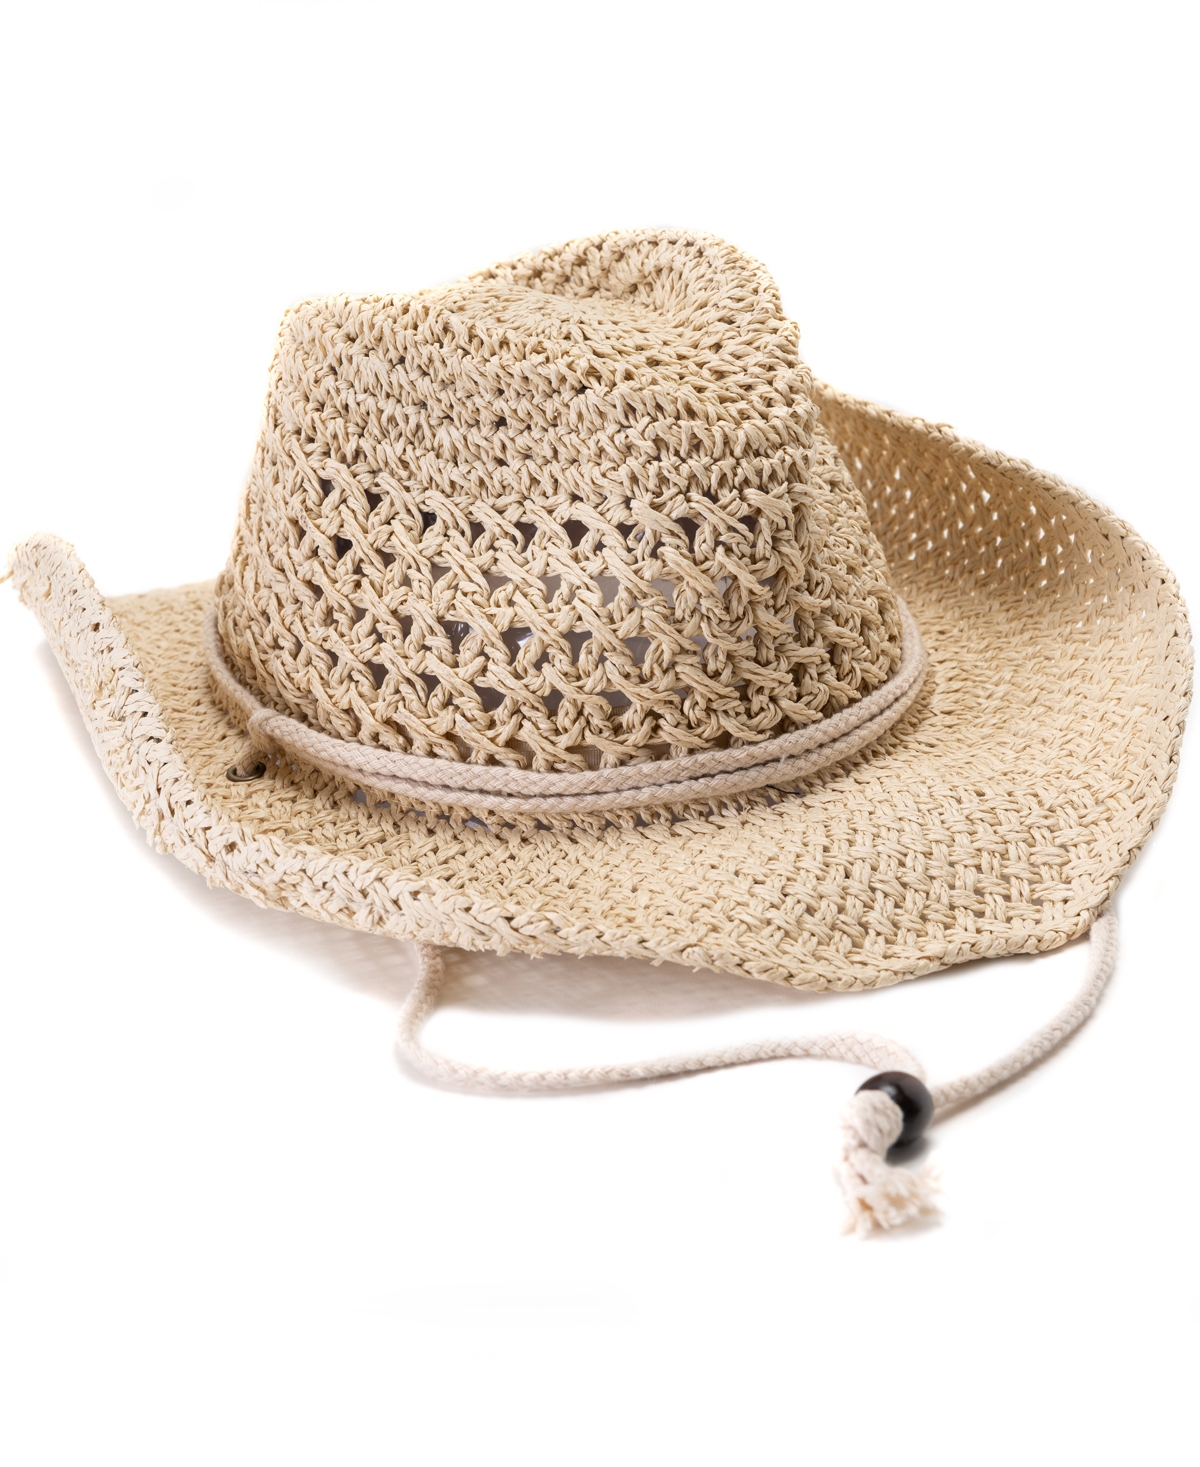 Crochet Straw Cowboy Hat with Chin Strap - Tan